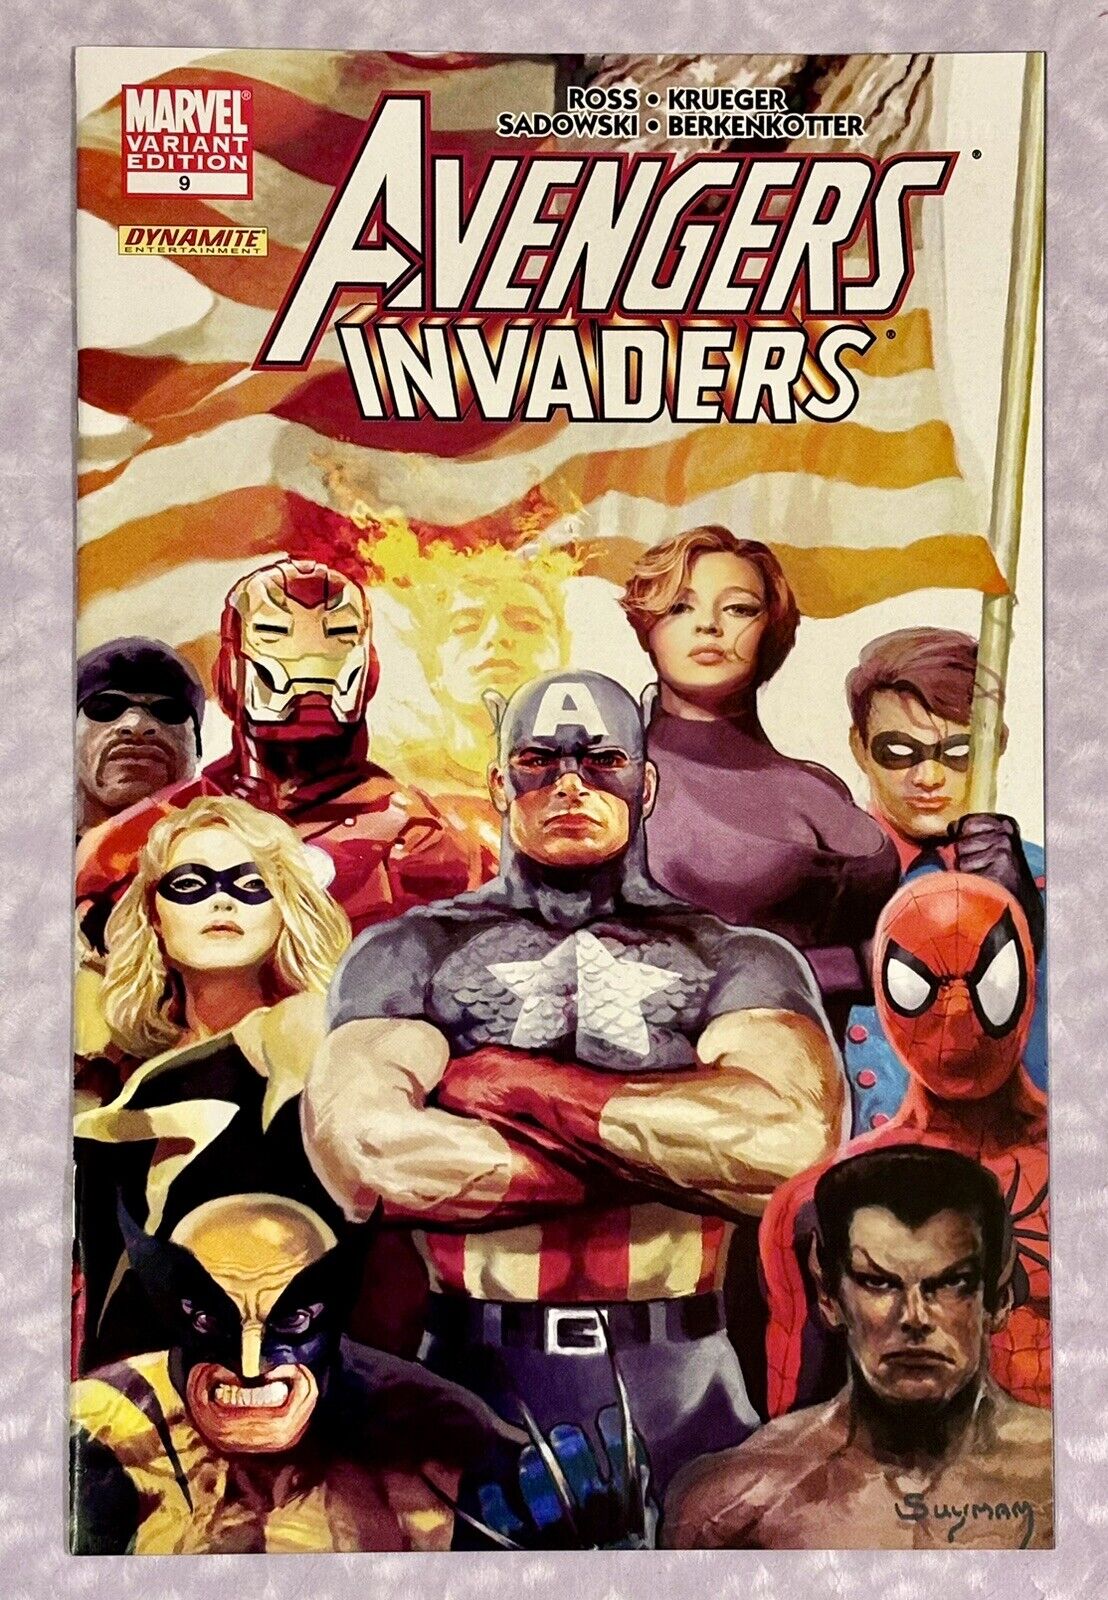 Avengers Invaders #9 Arthur Suydam Variant Dynamite Spider-Man